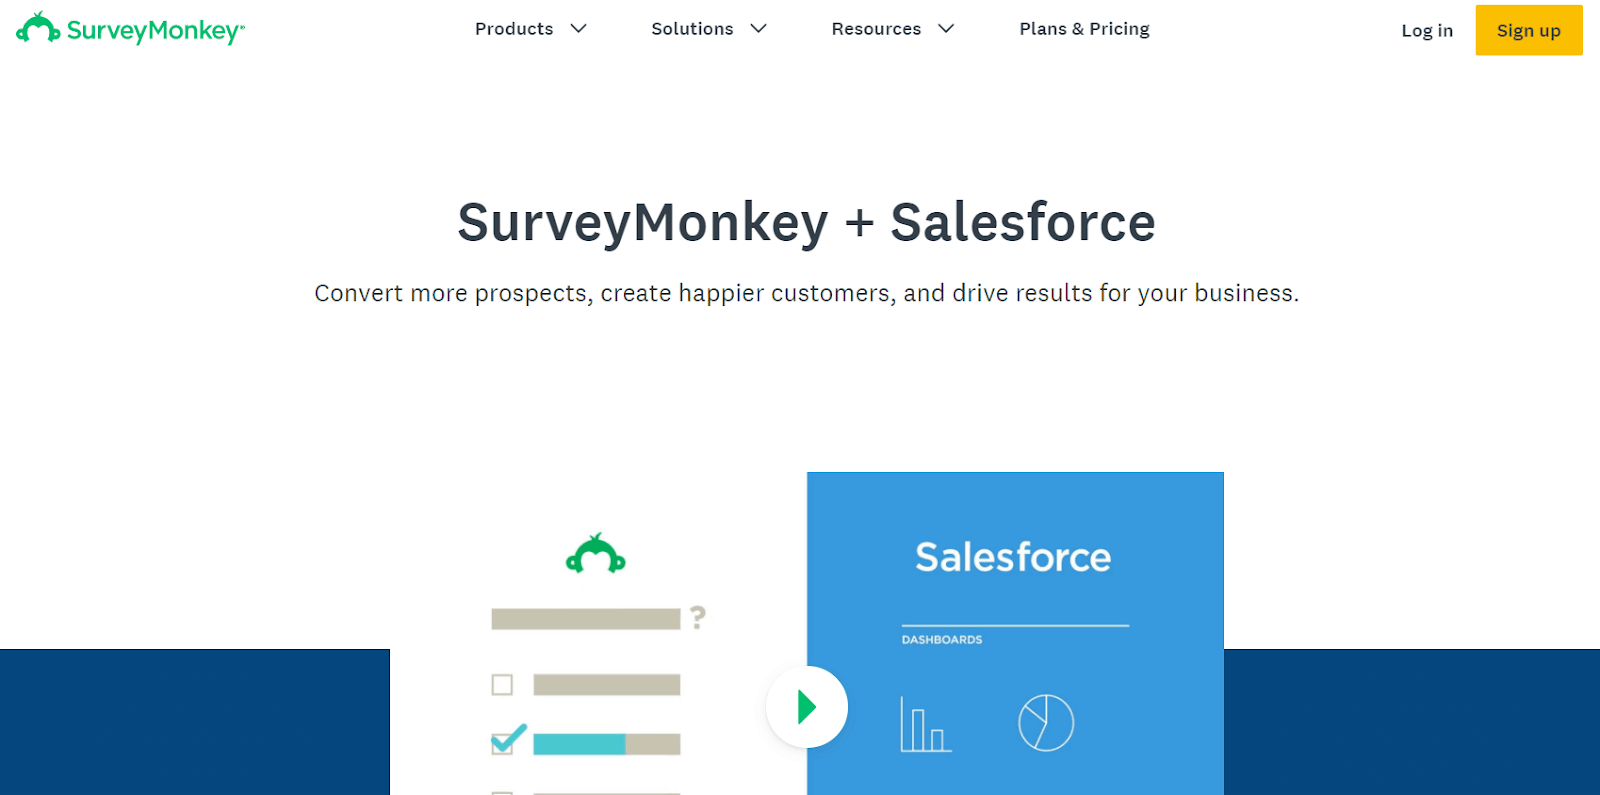 3. SurveyMonkey Salesforce tools